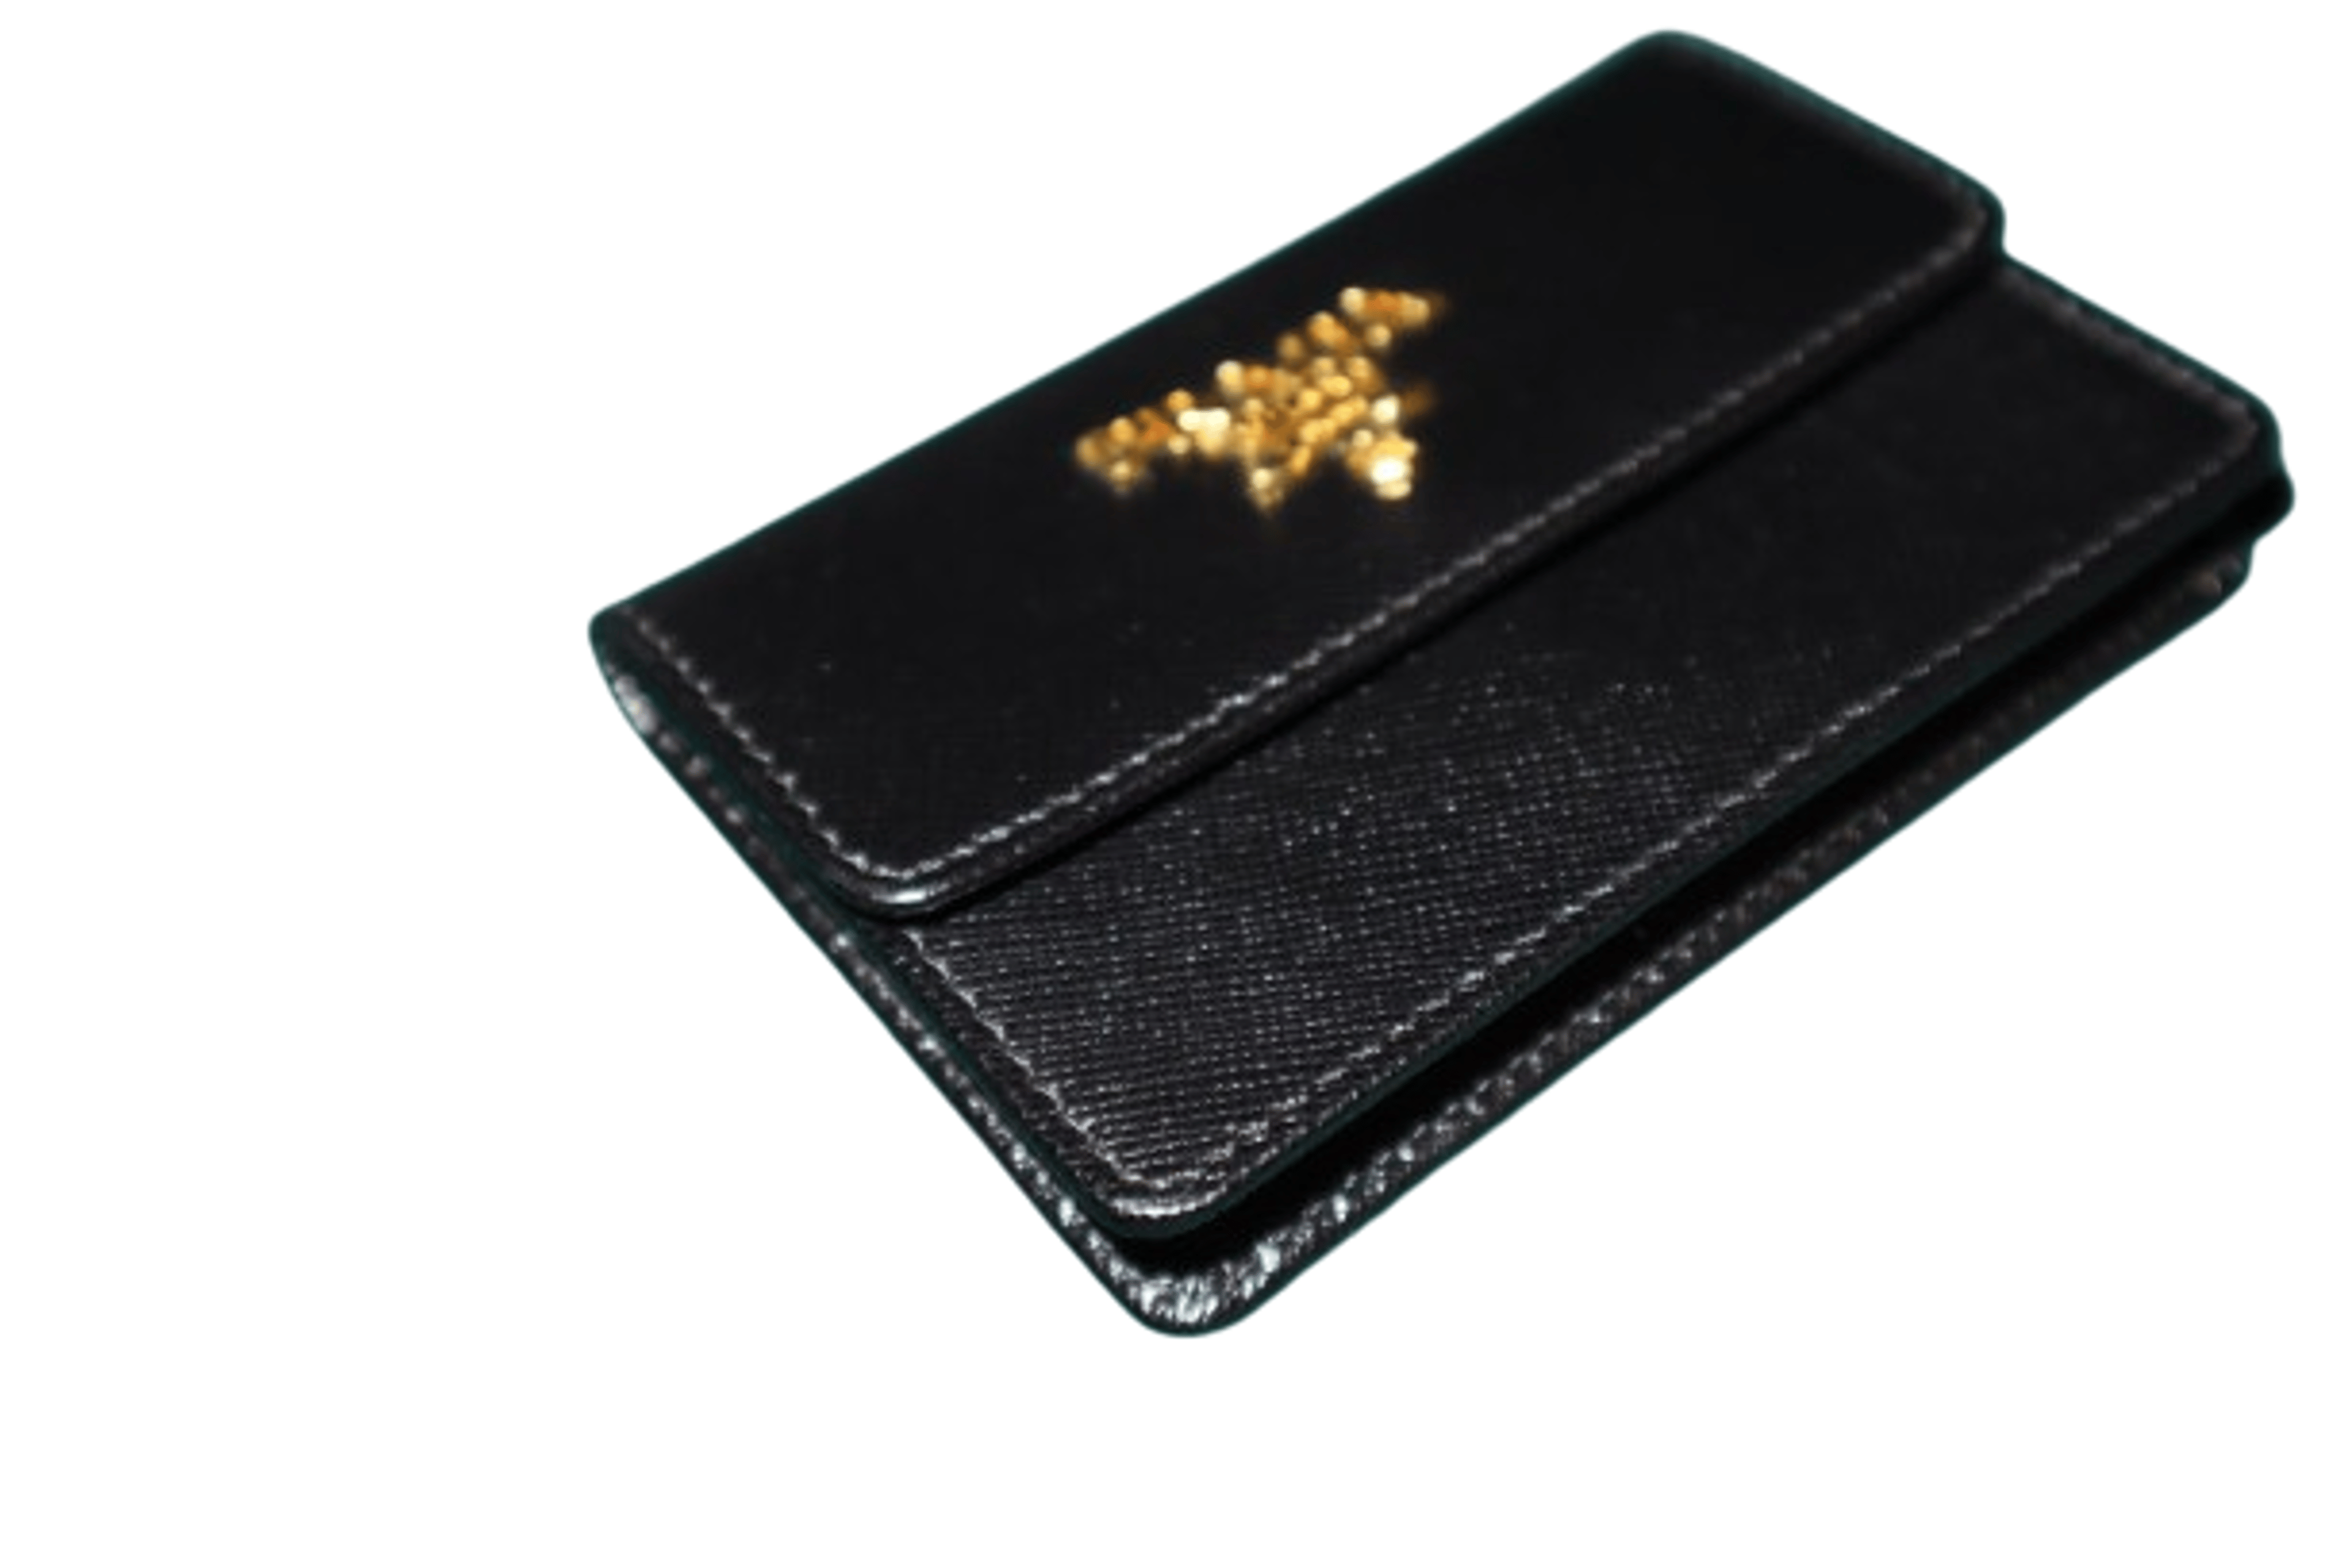 Alternate View 9 of Prada Black Saffiano Leather Flap Card Holder NEW